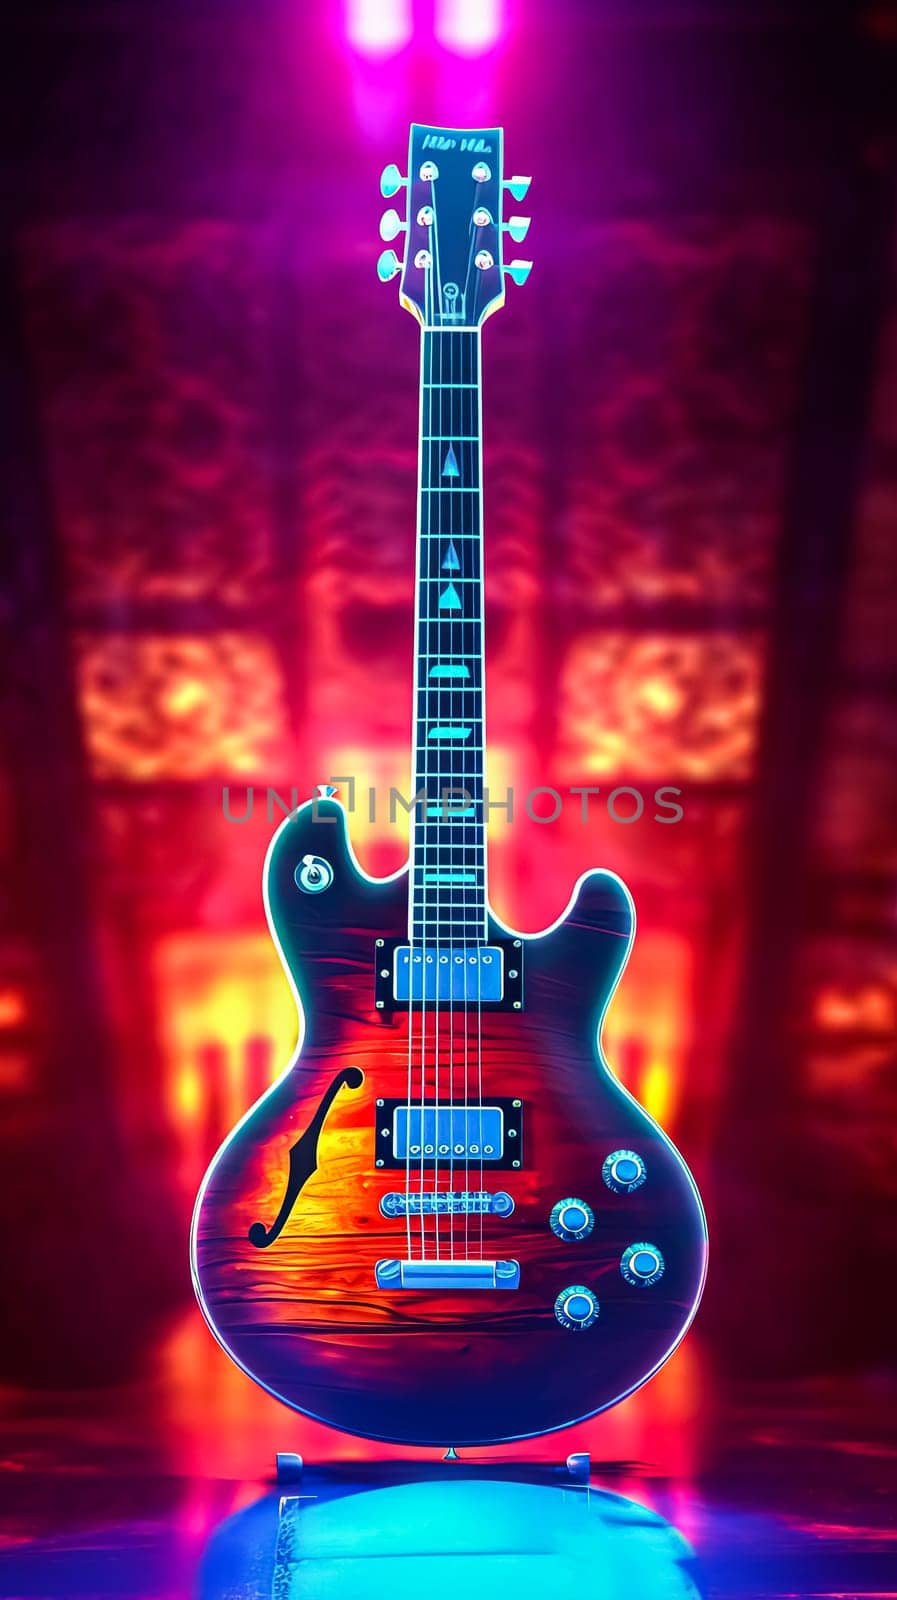 A neon guitar with a purple and blue color scheme. by Alla_Morozova93